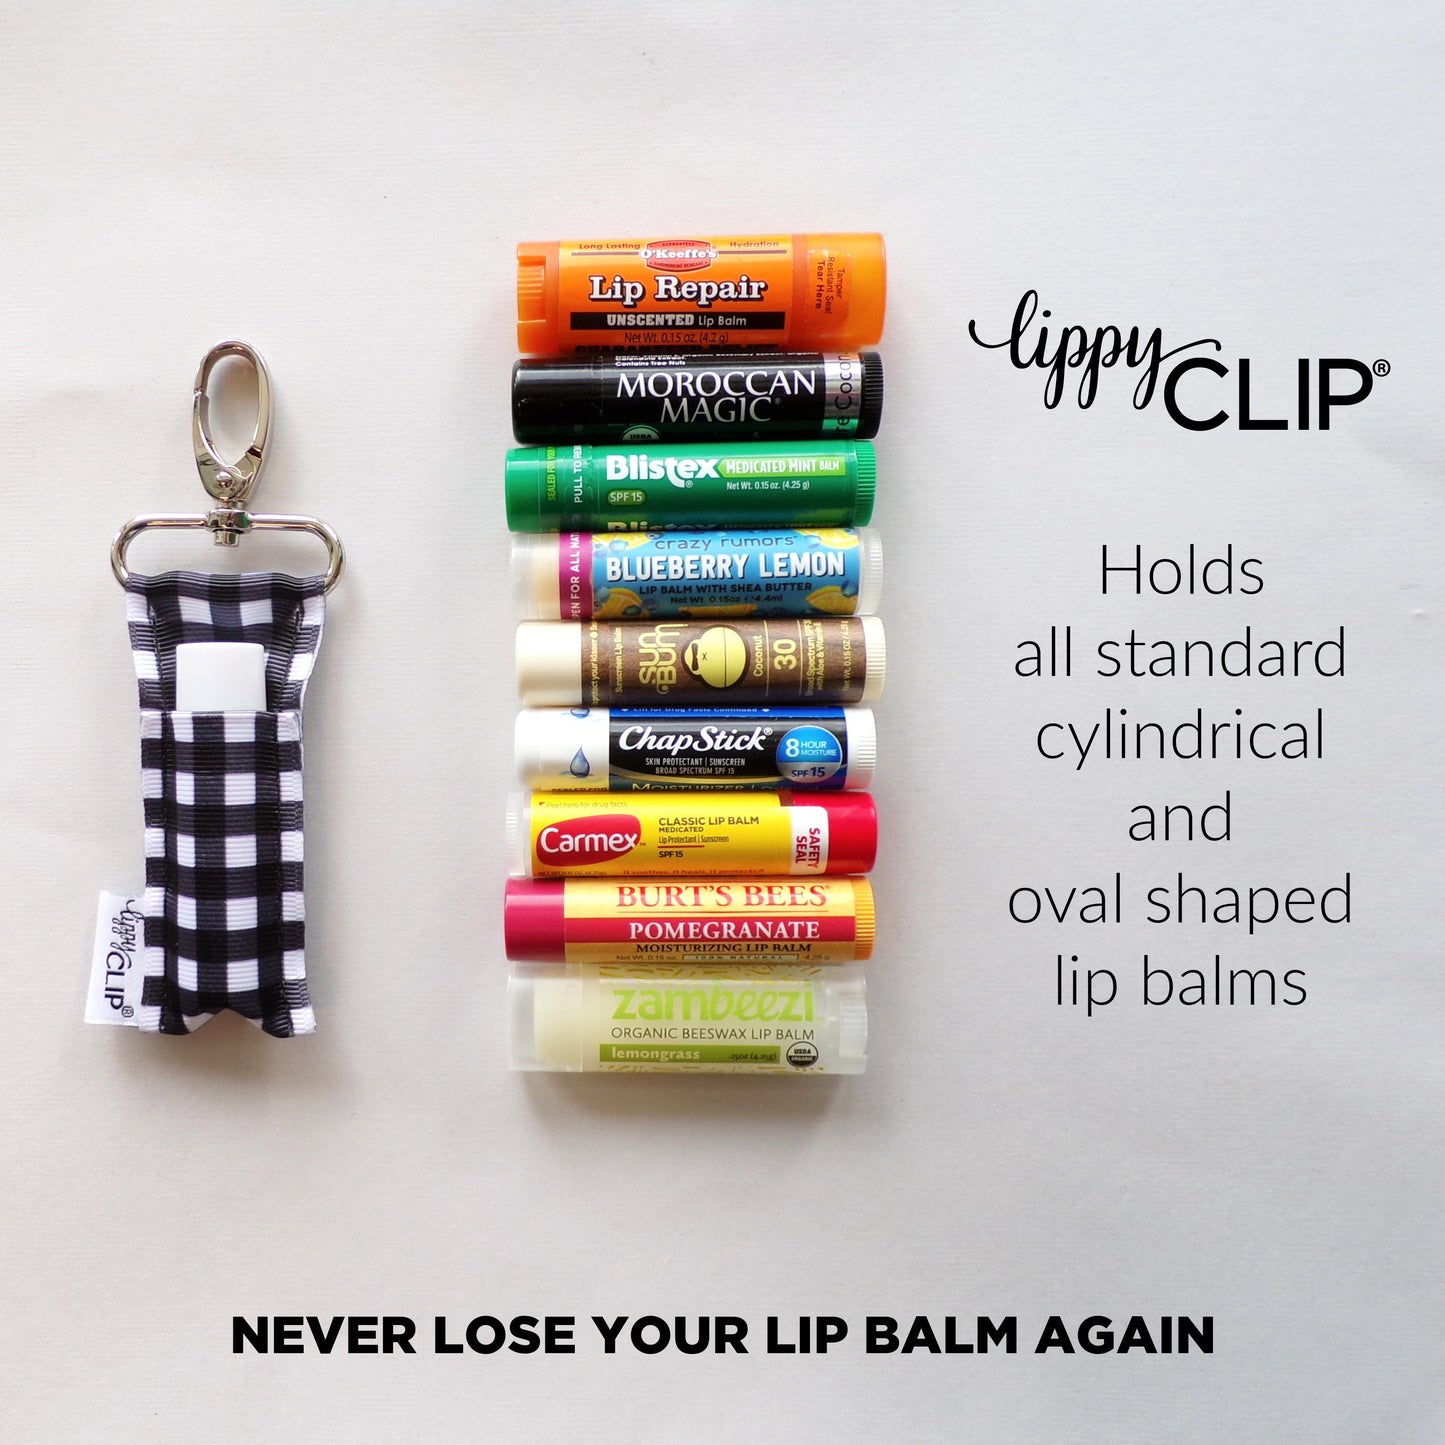 Fruity Drinks LippyClip® Lip Balm Holder